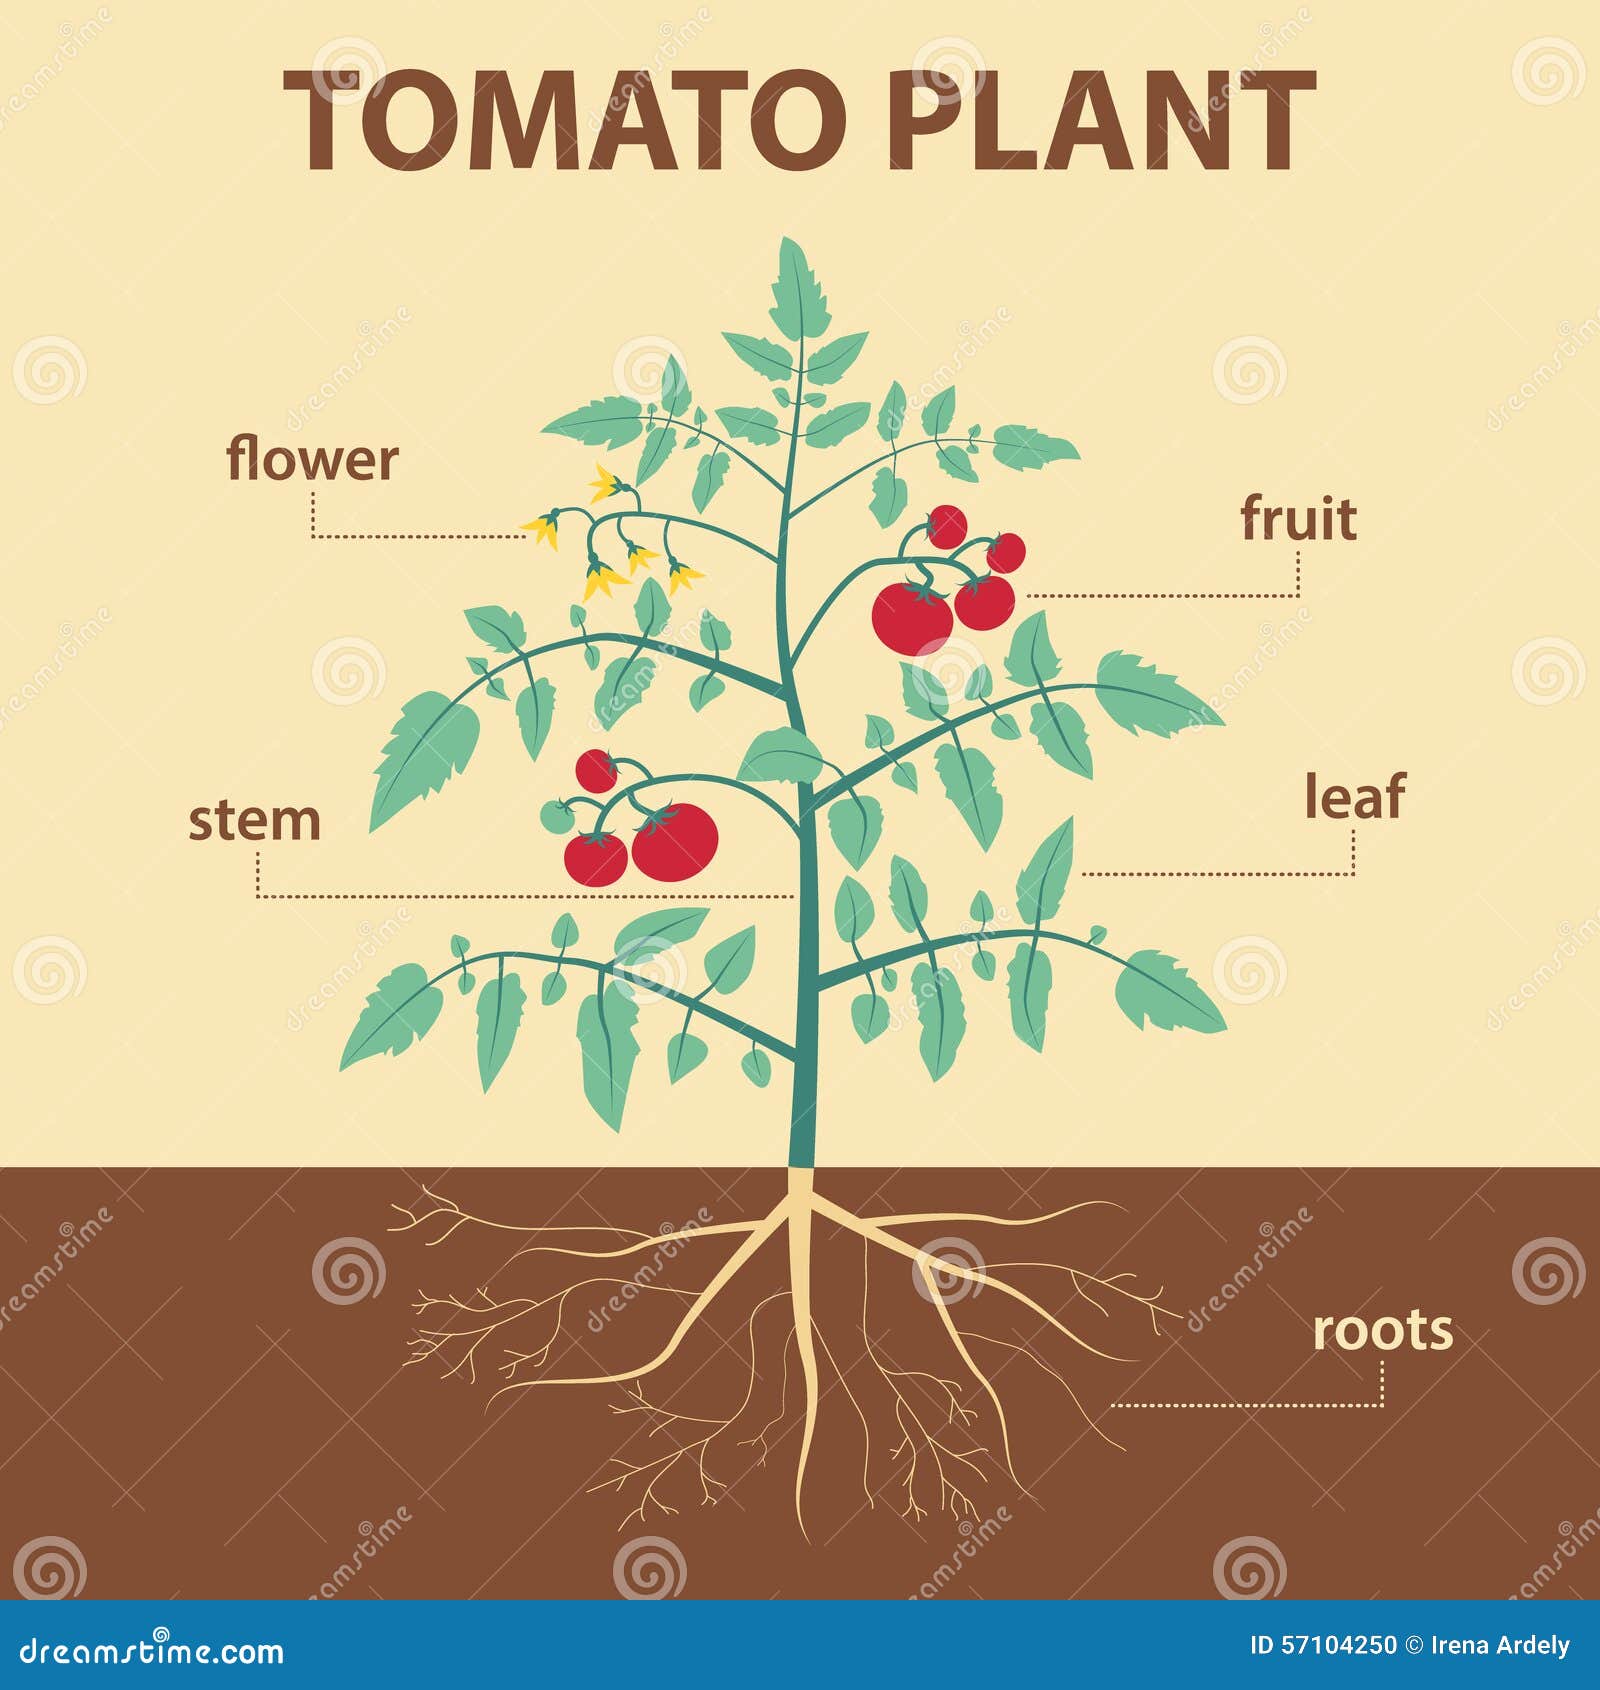 Tomato Plant Stock Vector - Image: 57104250